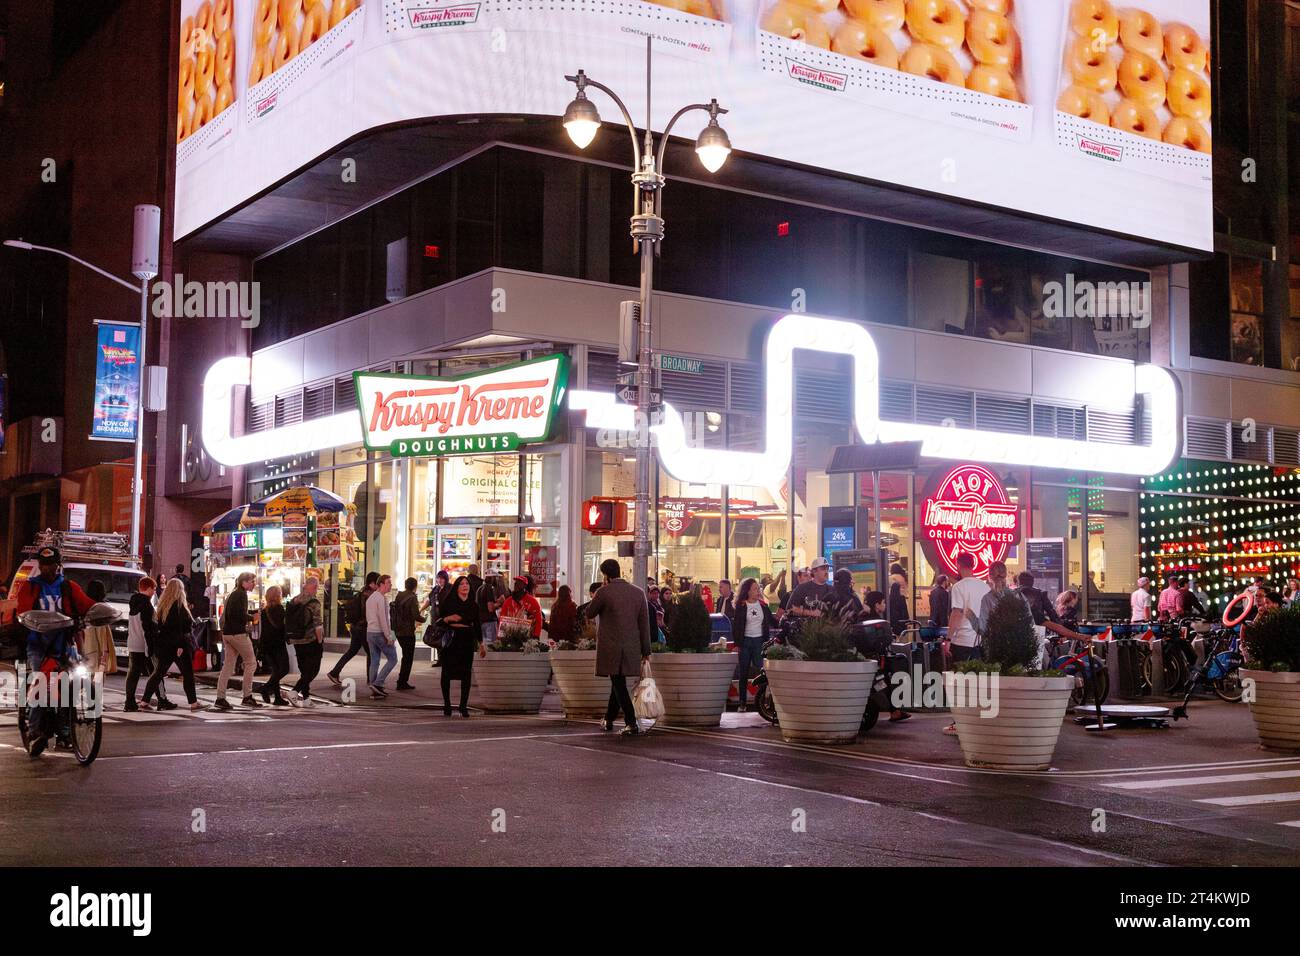 Krispy Kreme Doughnut store, Times Square, New York City, United States of America. Stock Photo